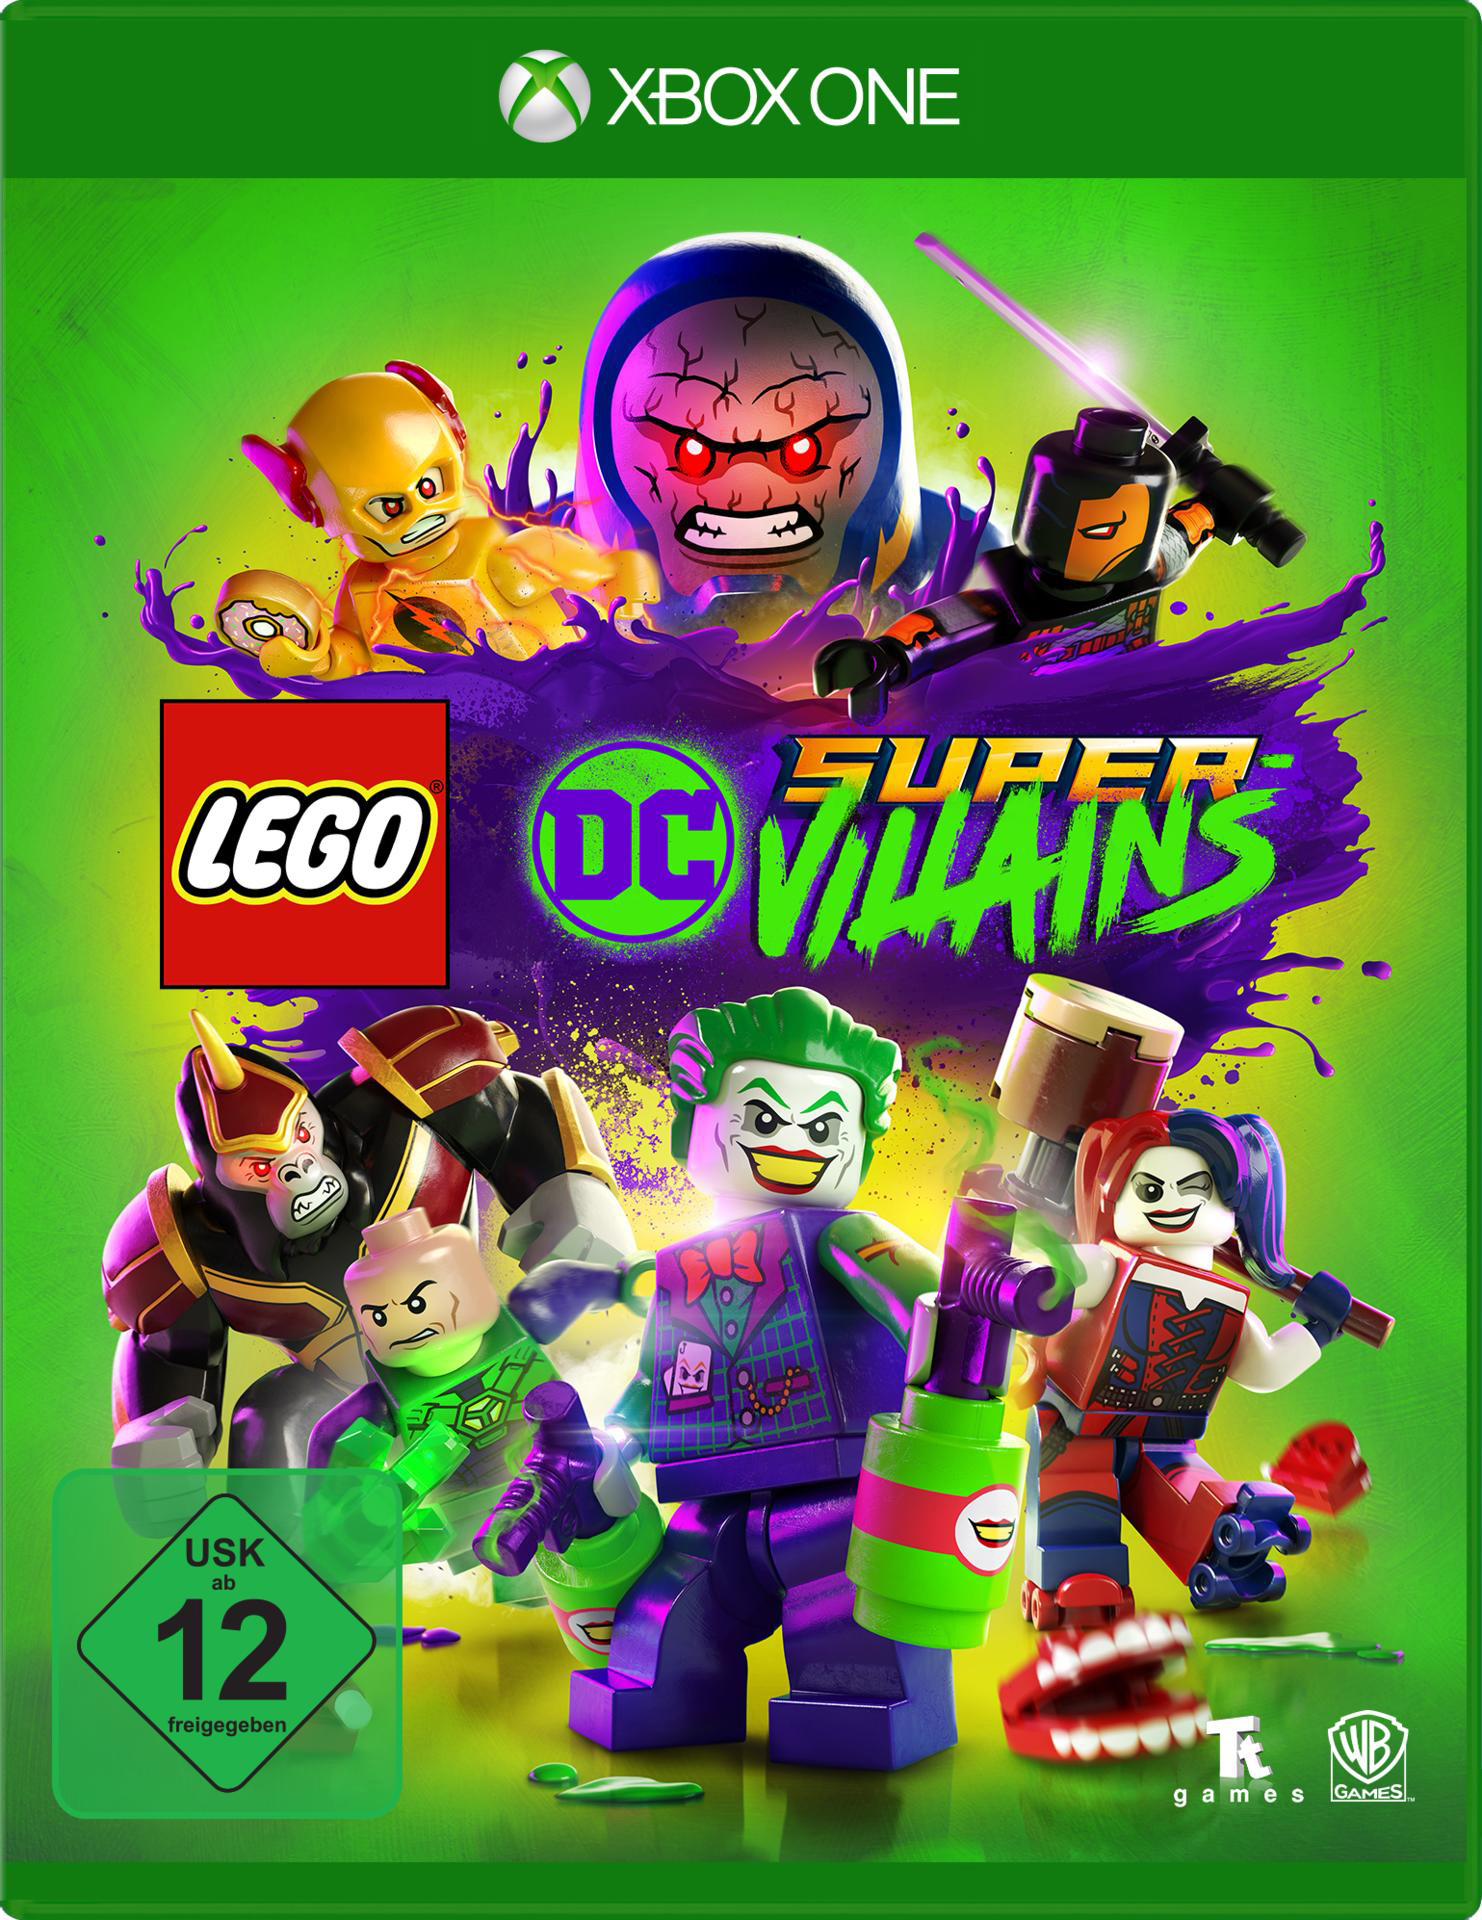 DC One] [Xbox Supervillains - LEGO